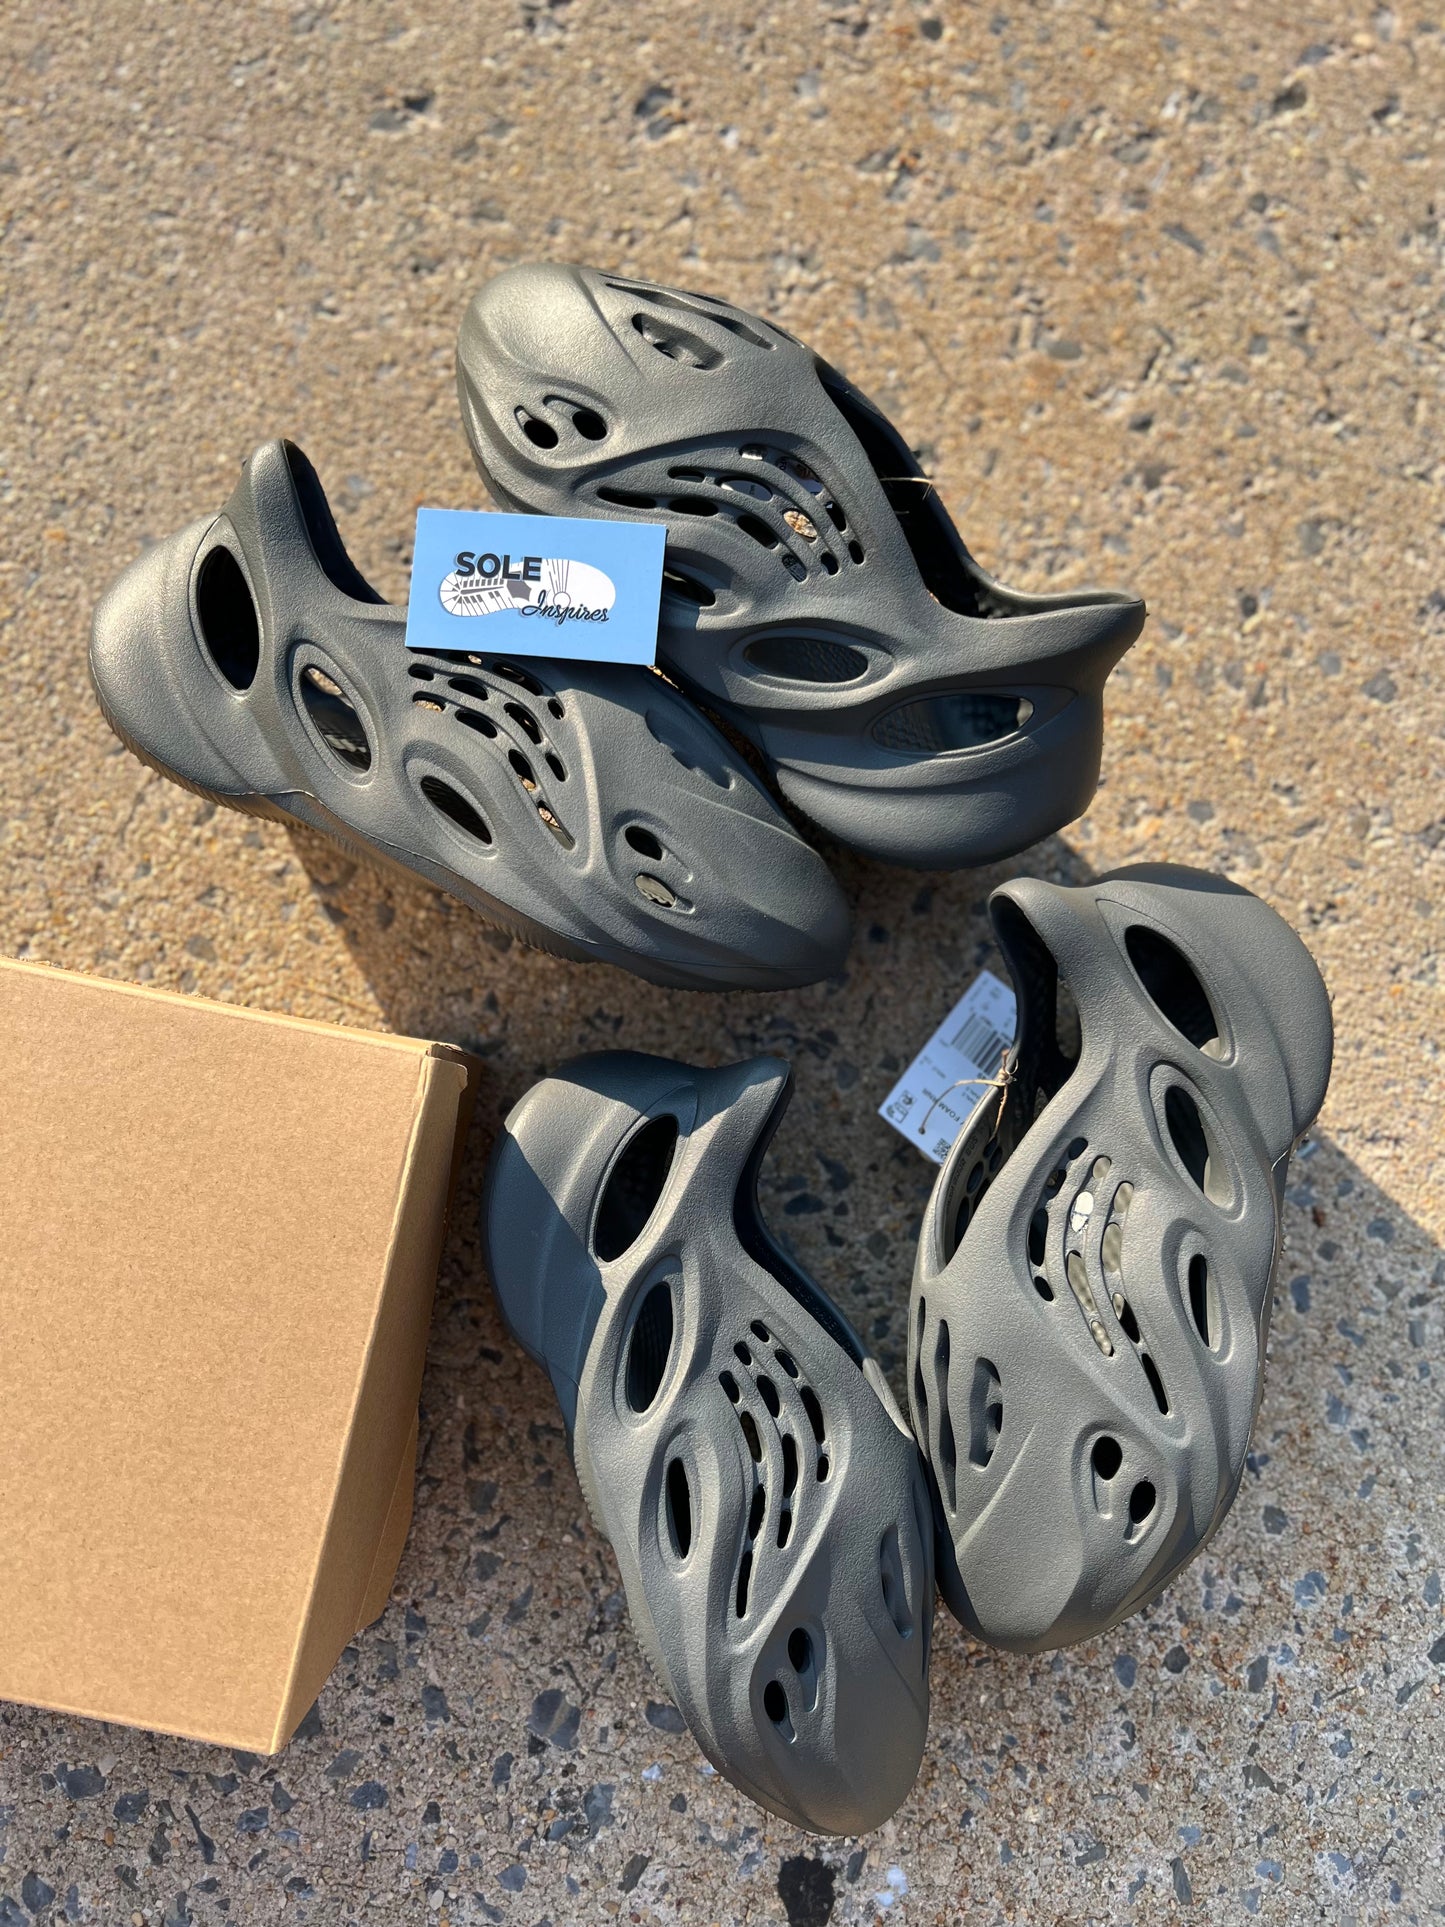 adidas YEEZY Foam Runner MX Carbon On-Foot Look